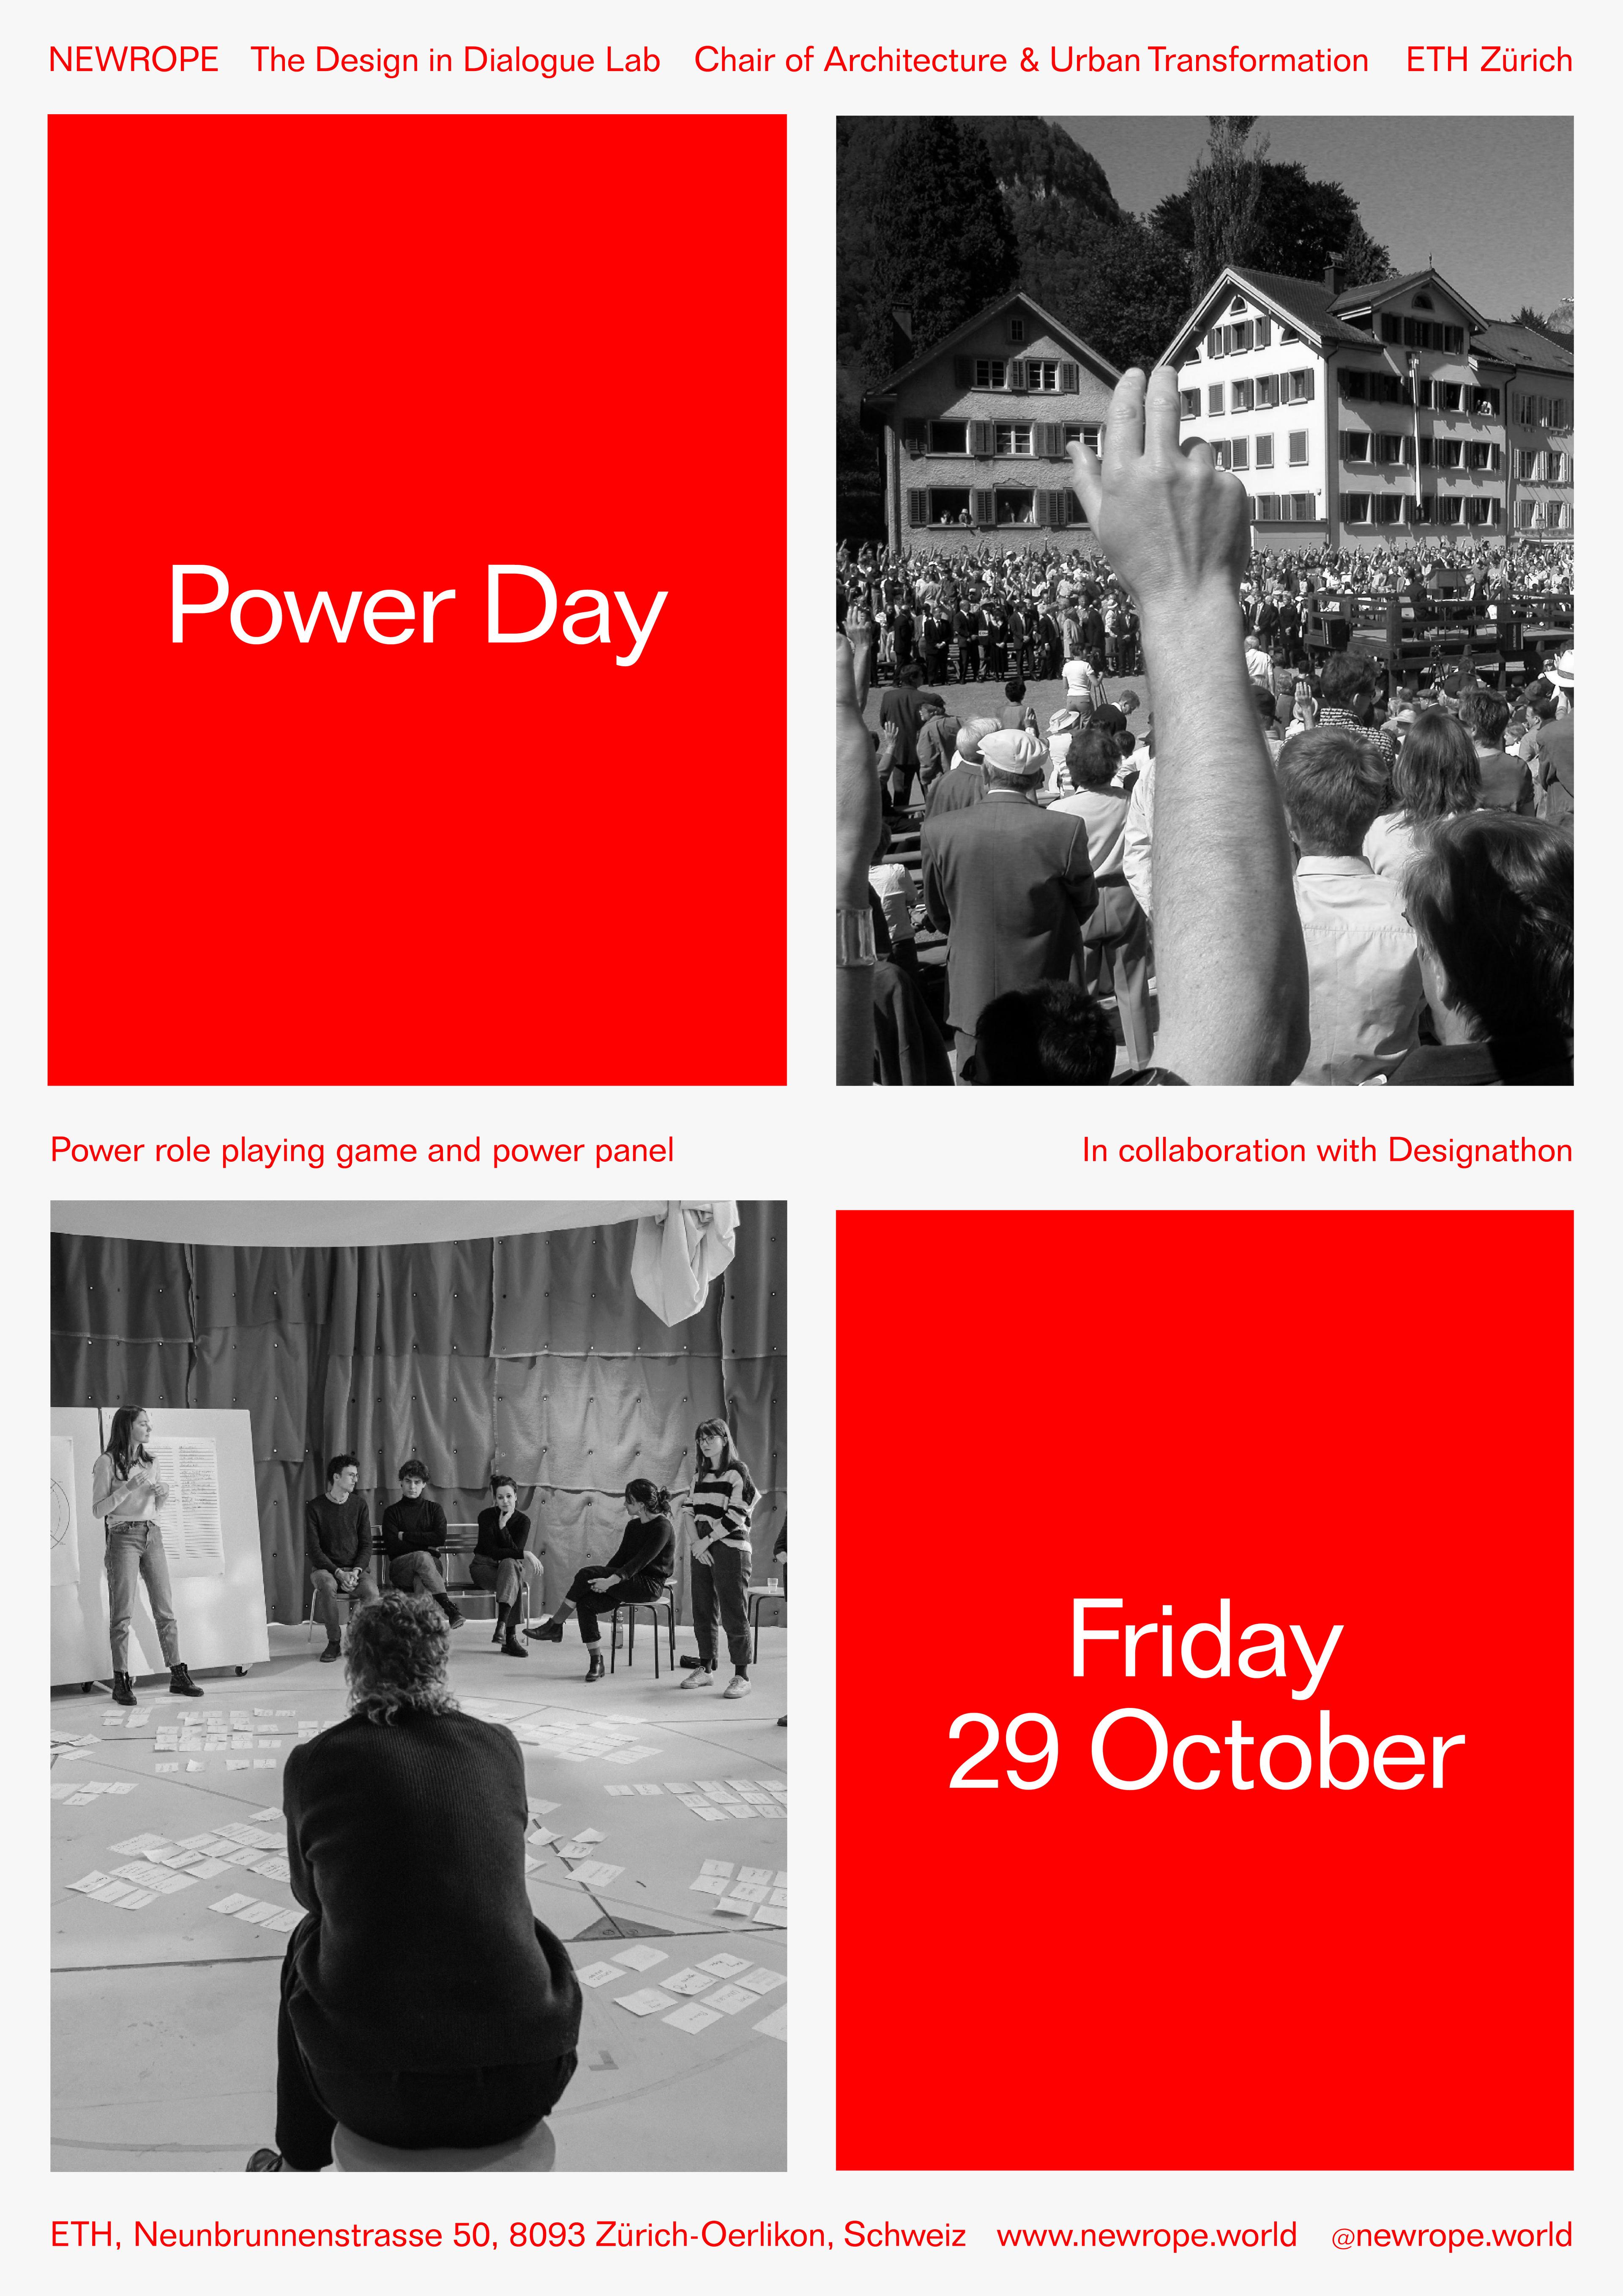 Power Day - Friday October 29